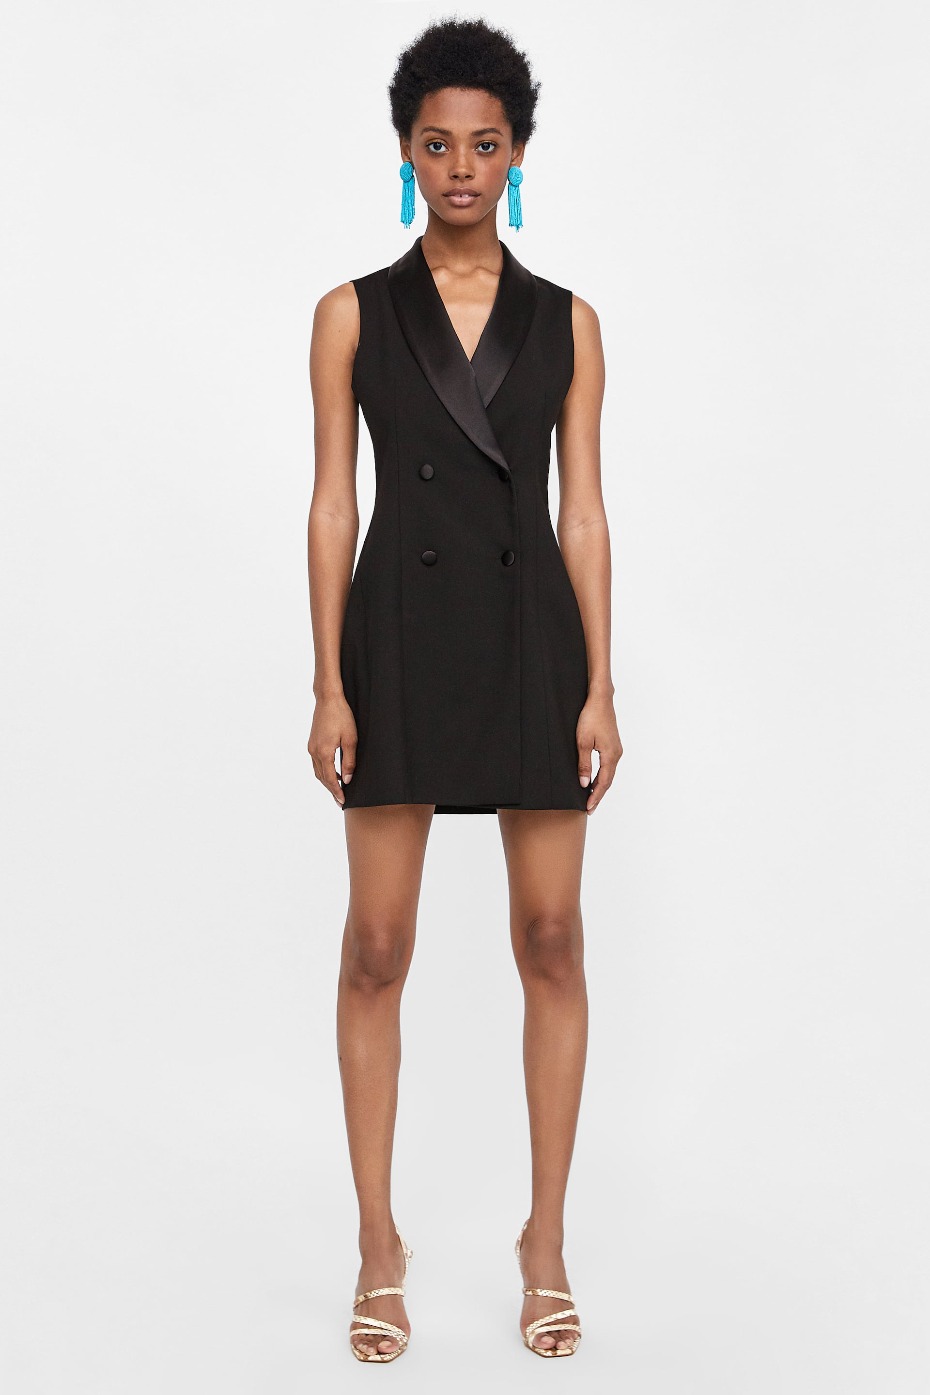 Zara Tuxedo Dress Vest